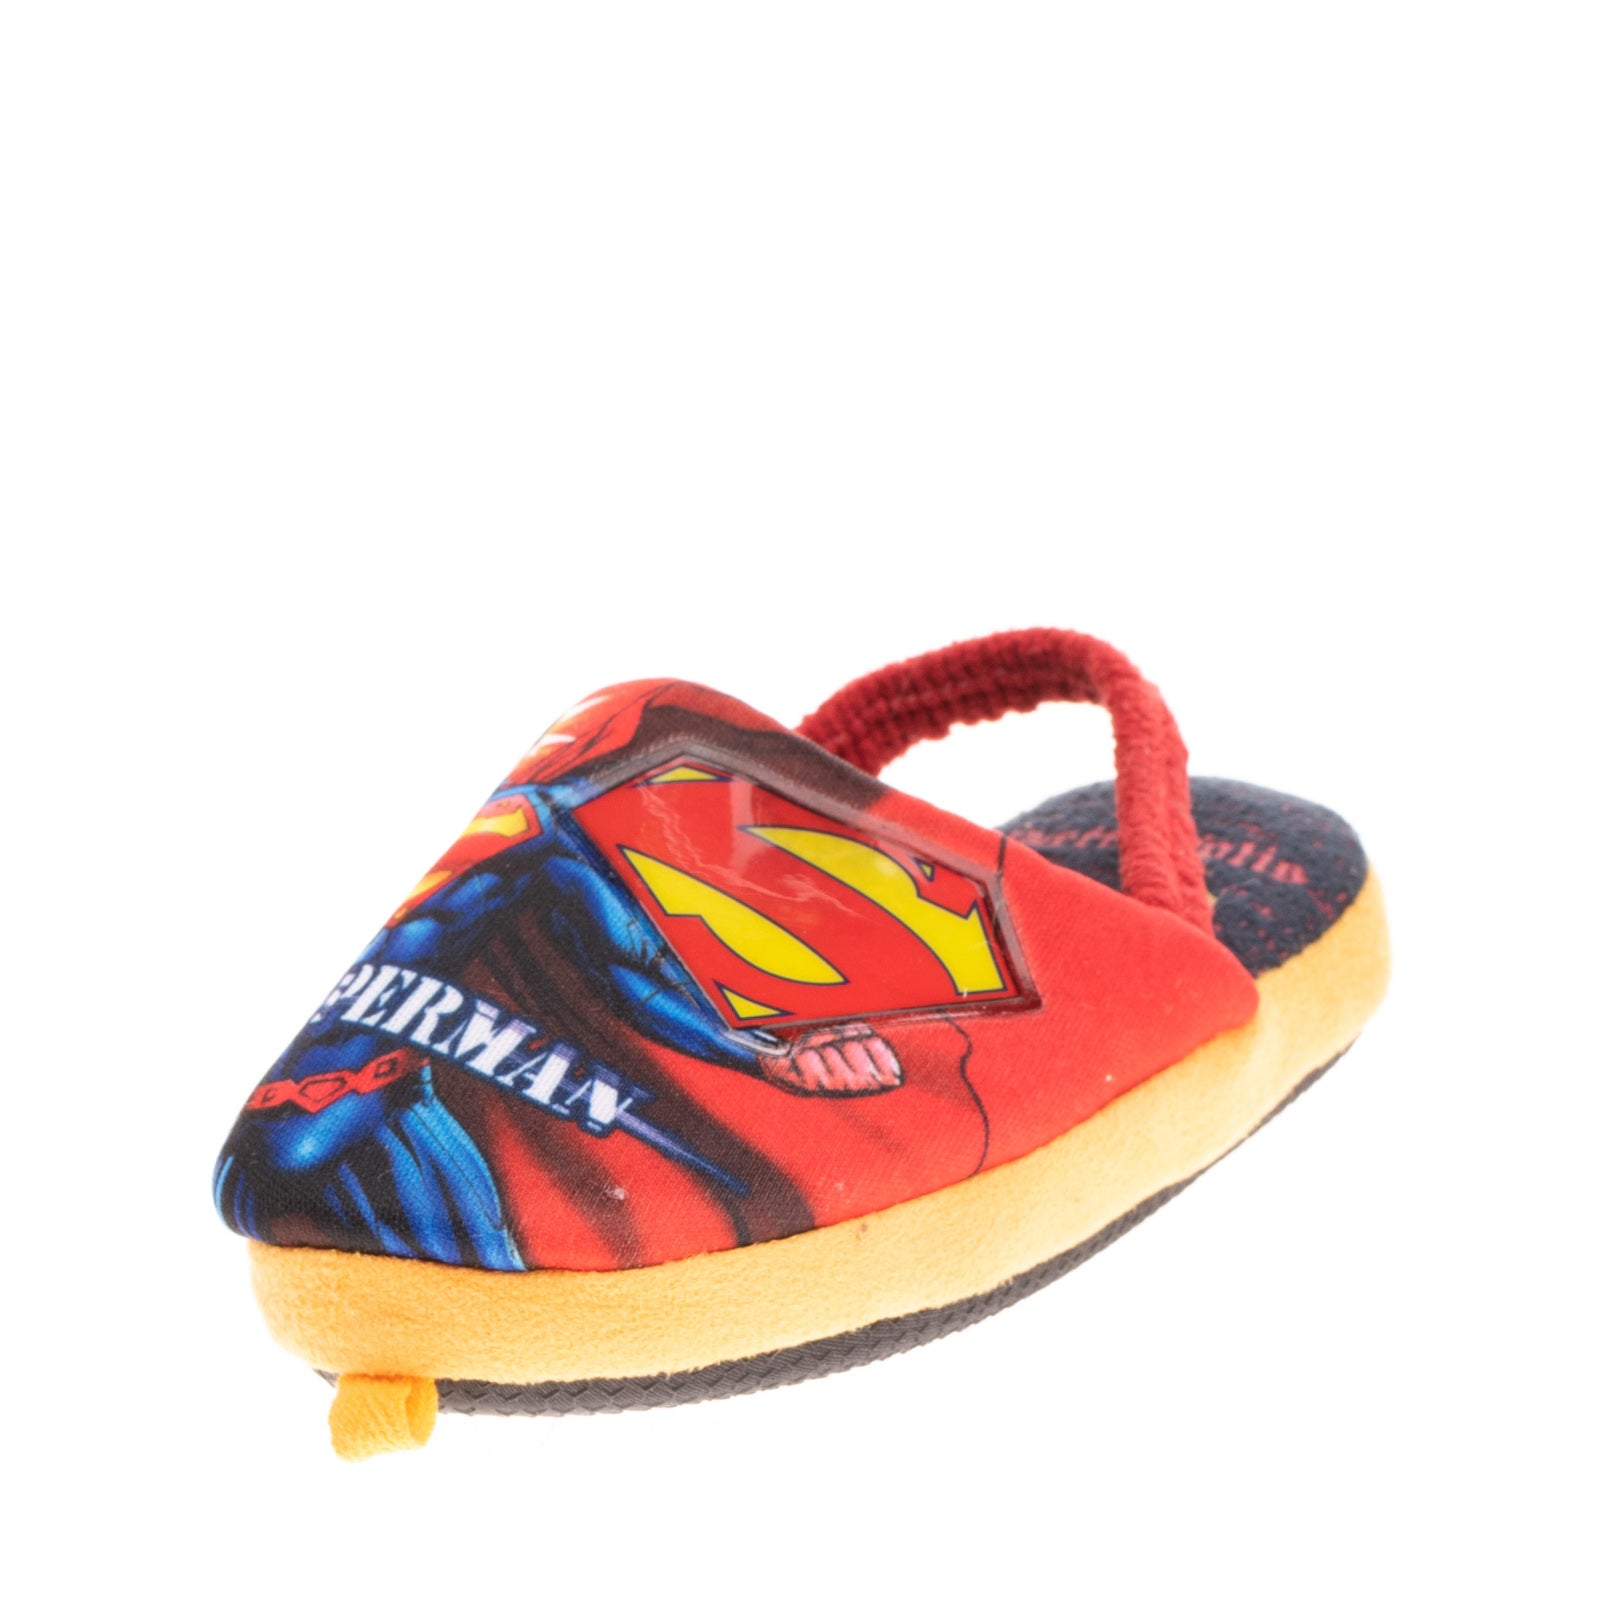 ARNETTA Slippers Size EU 22-23 / UK 5-6 / US 6-7 'SUPERMAN' Print Slip On gallery main photo